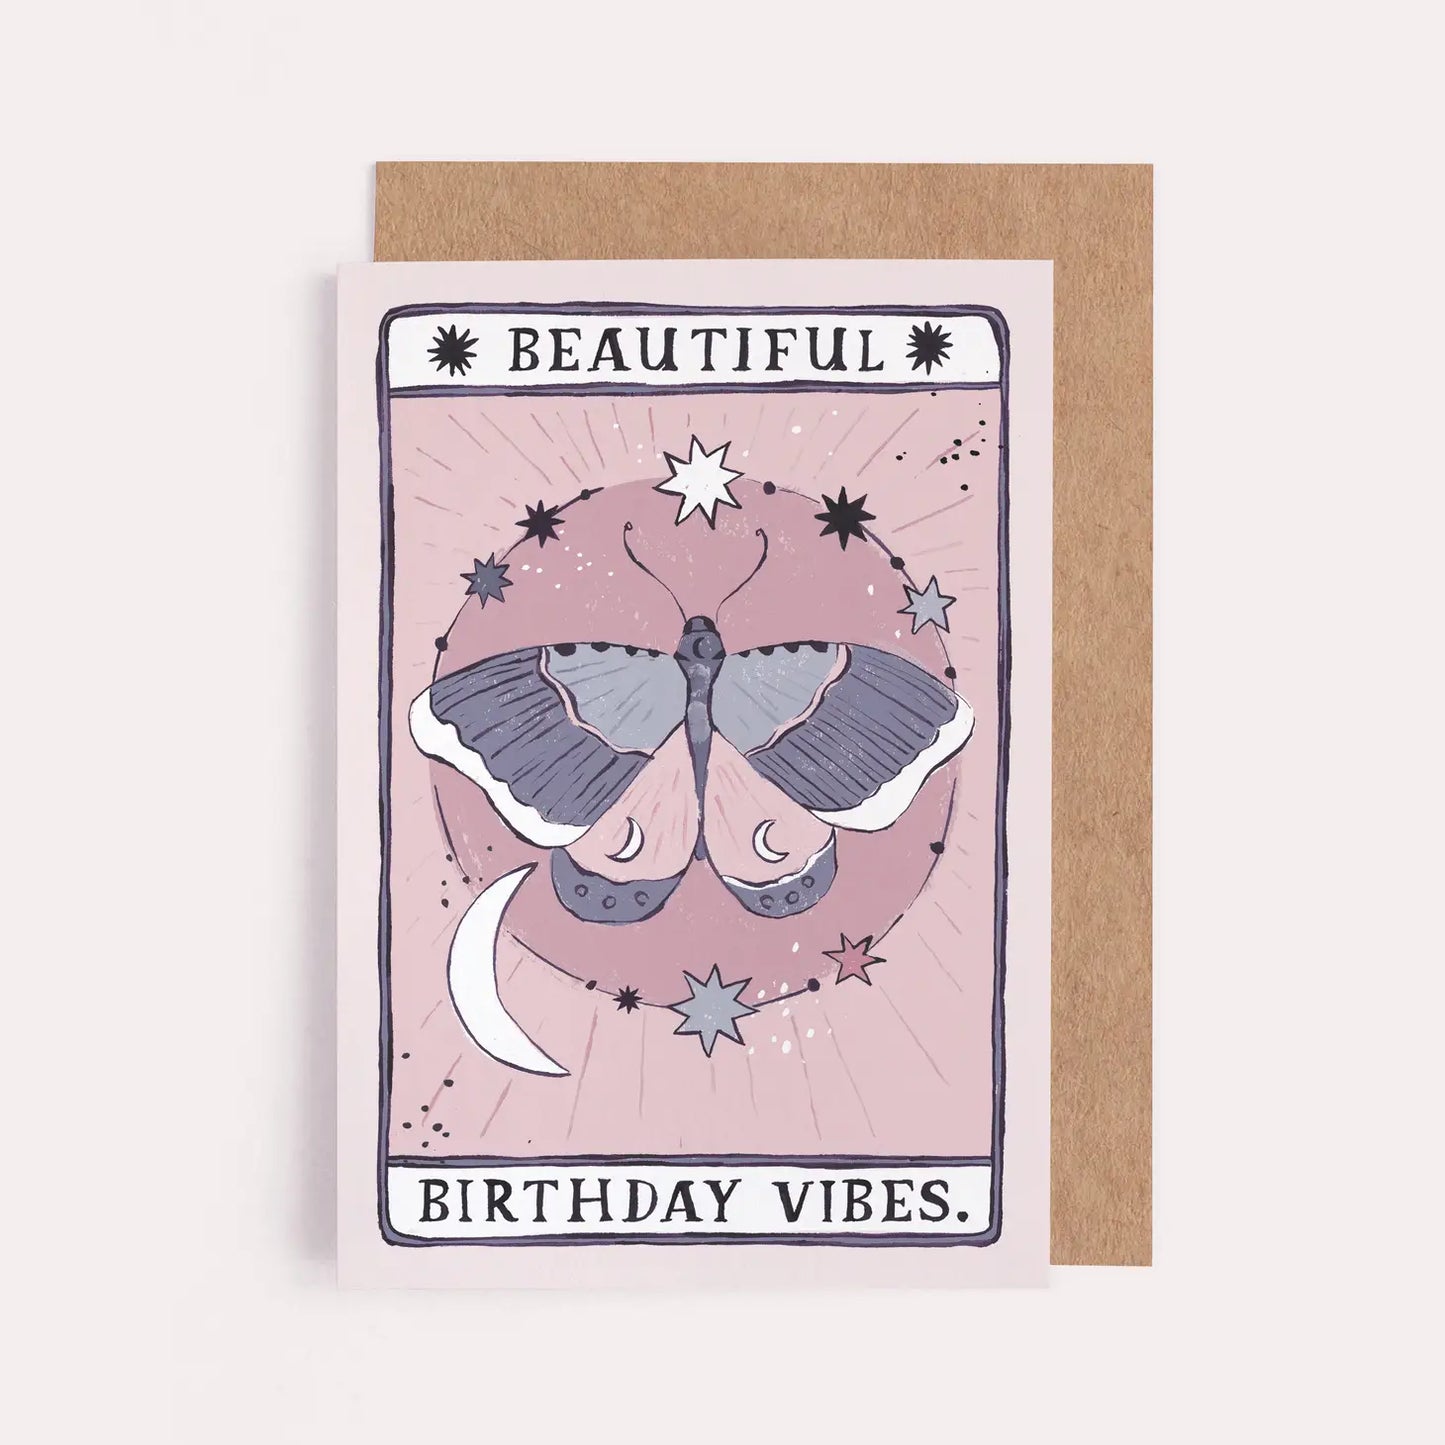 Moth Birthday Vibes Card - Tarot Card